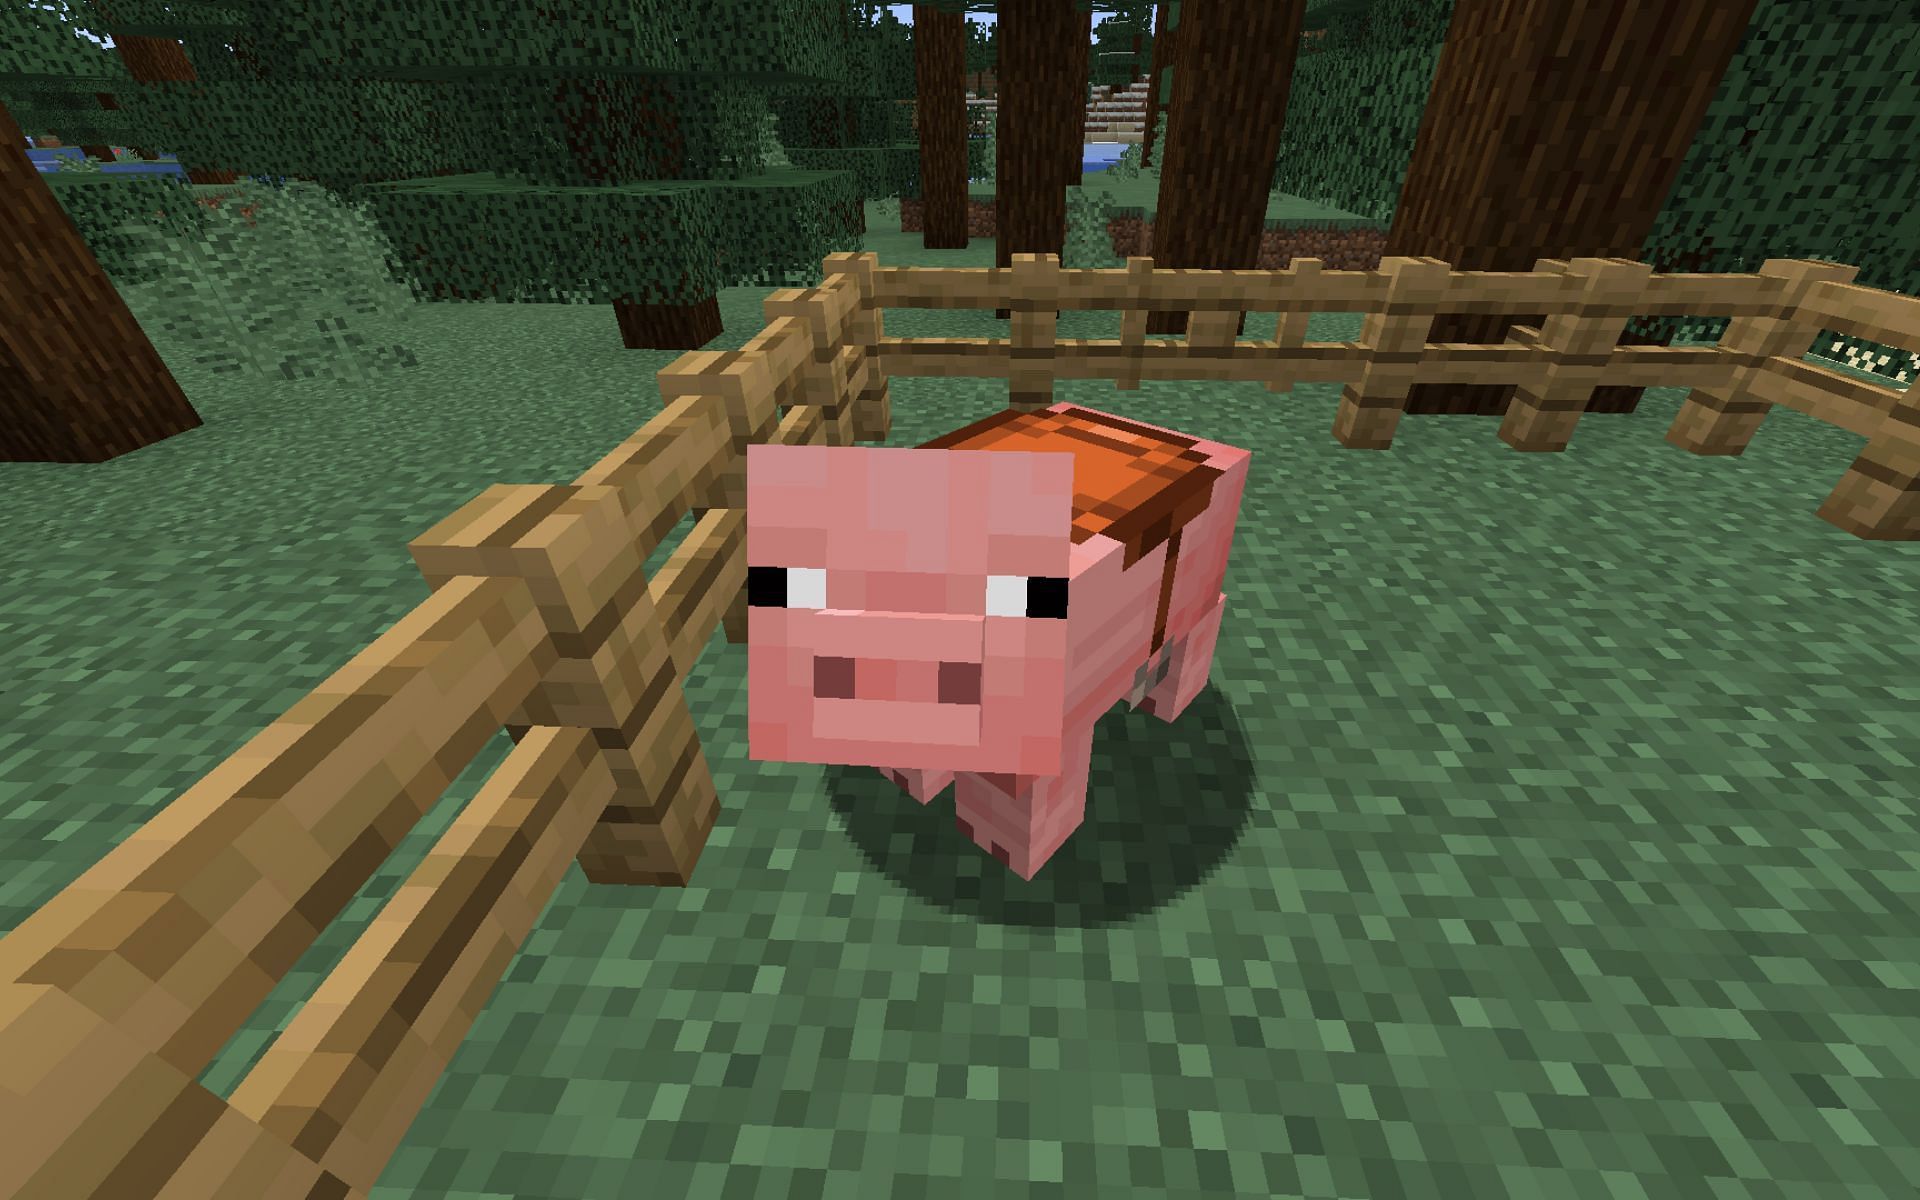 Pig with a saddle (Image via Minecraft)